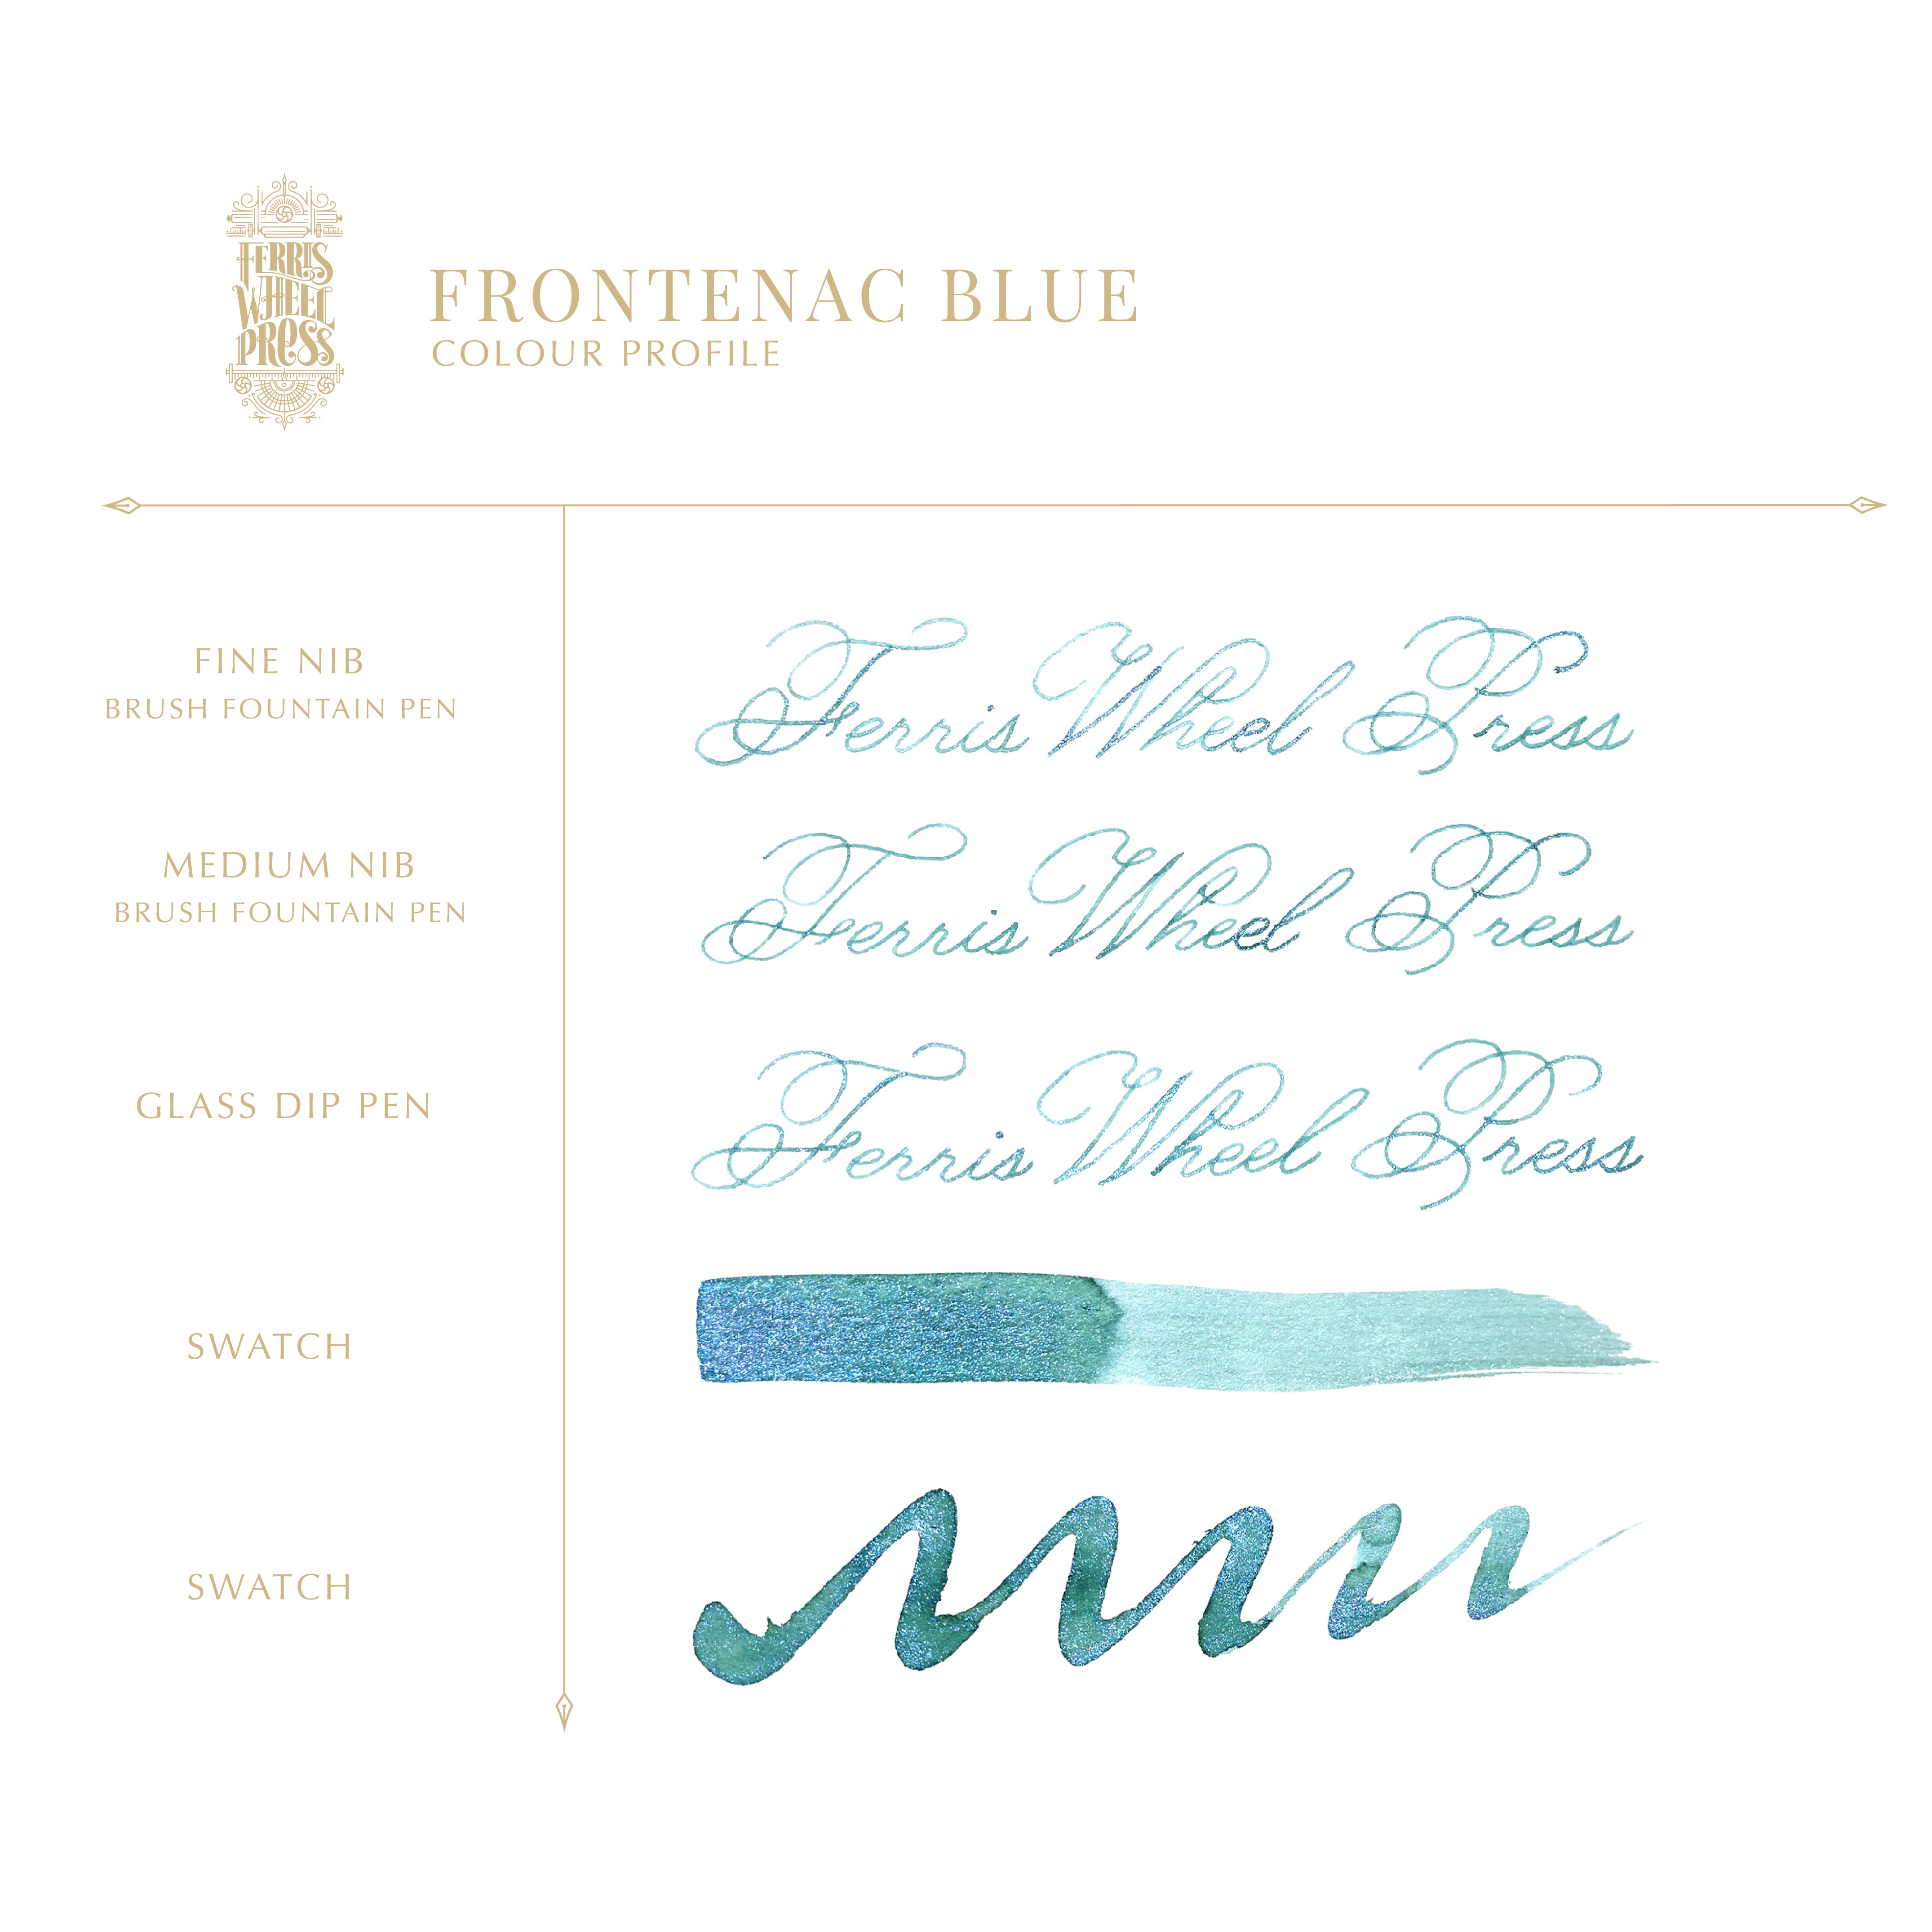 38ml Frontenac Blue Ink